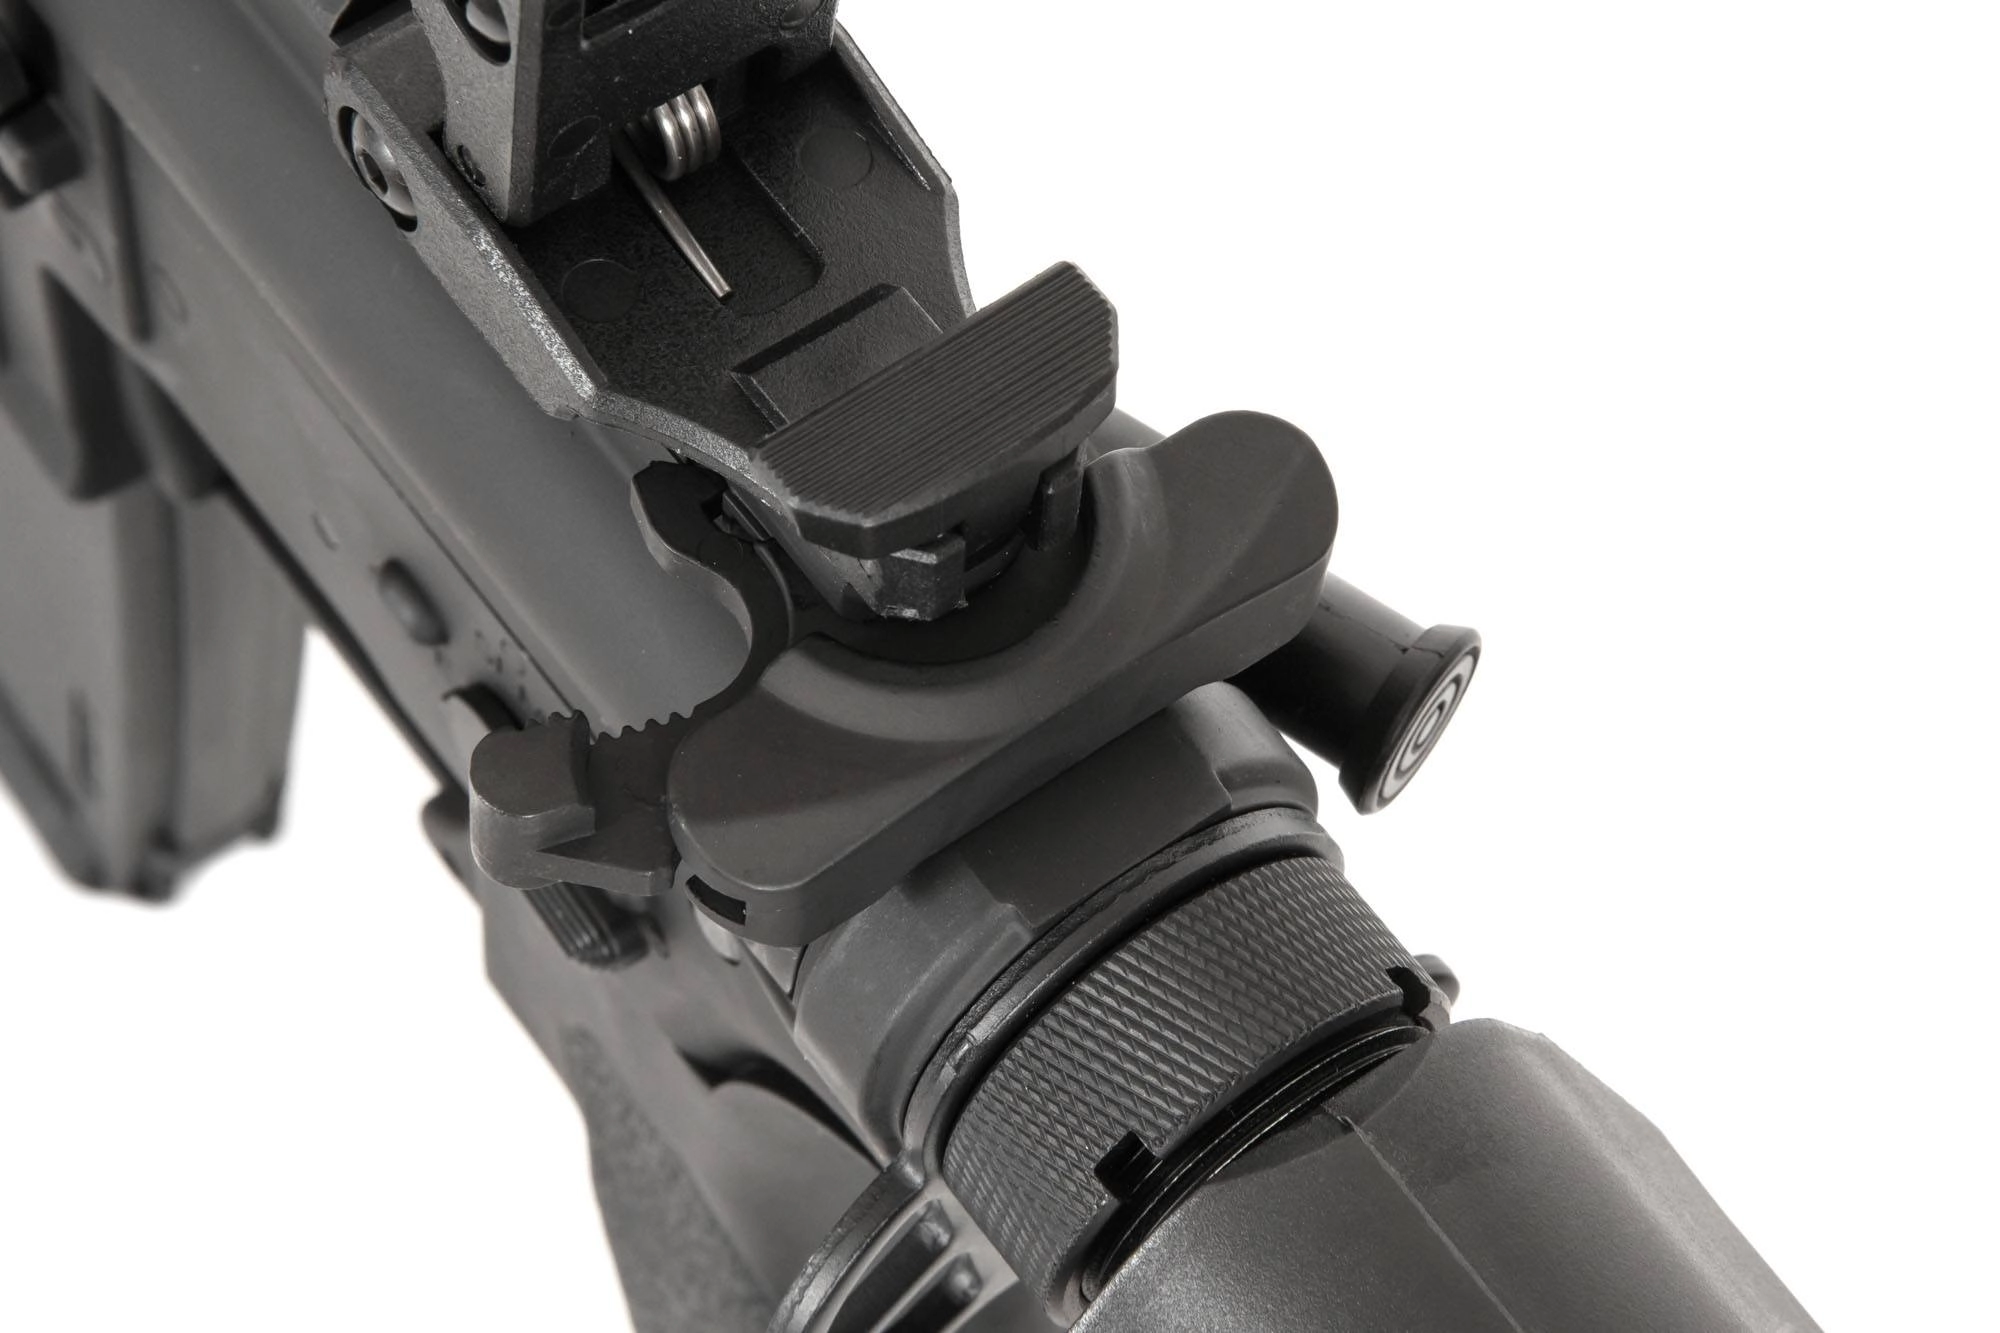 SPECNA ARMS AEG Rifle Edge 2.0 RRA SA-E03